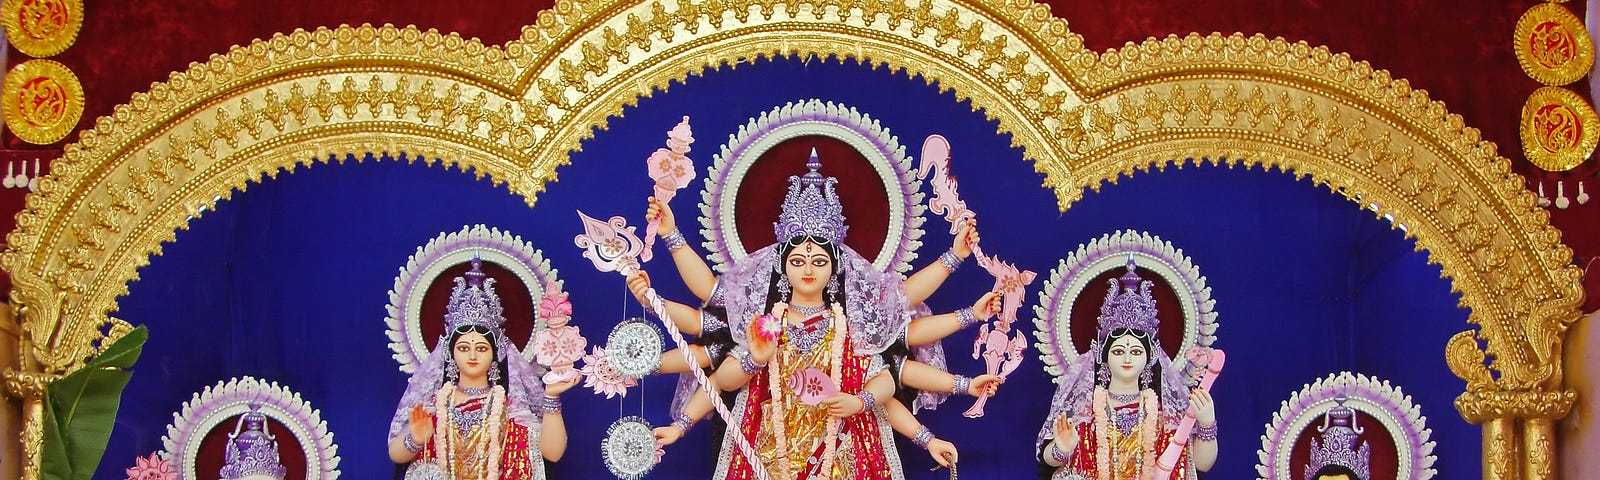 Image of the three forms of Divine Feminine. The center form — Durga — is shown to be killing the demon Mahishasura.